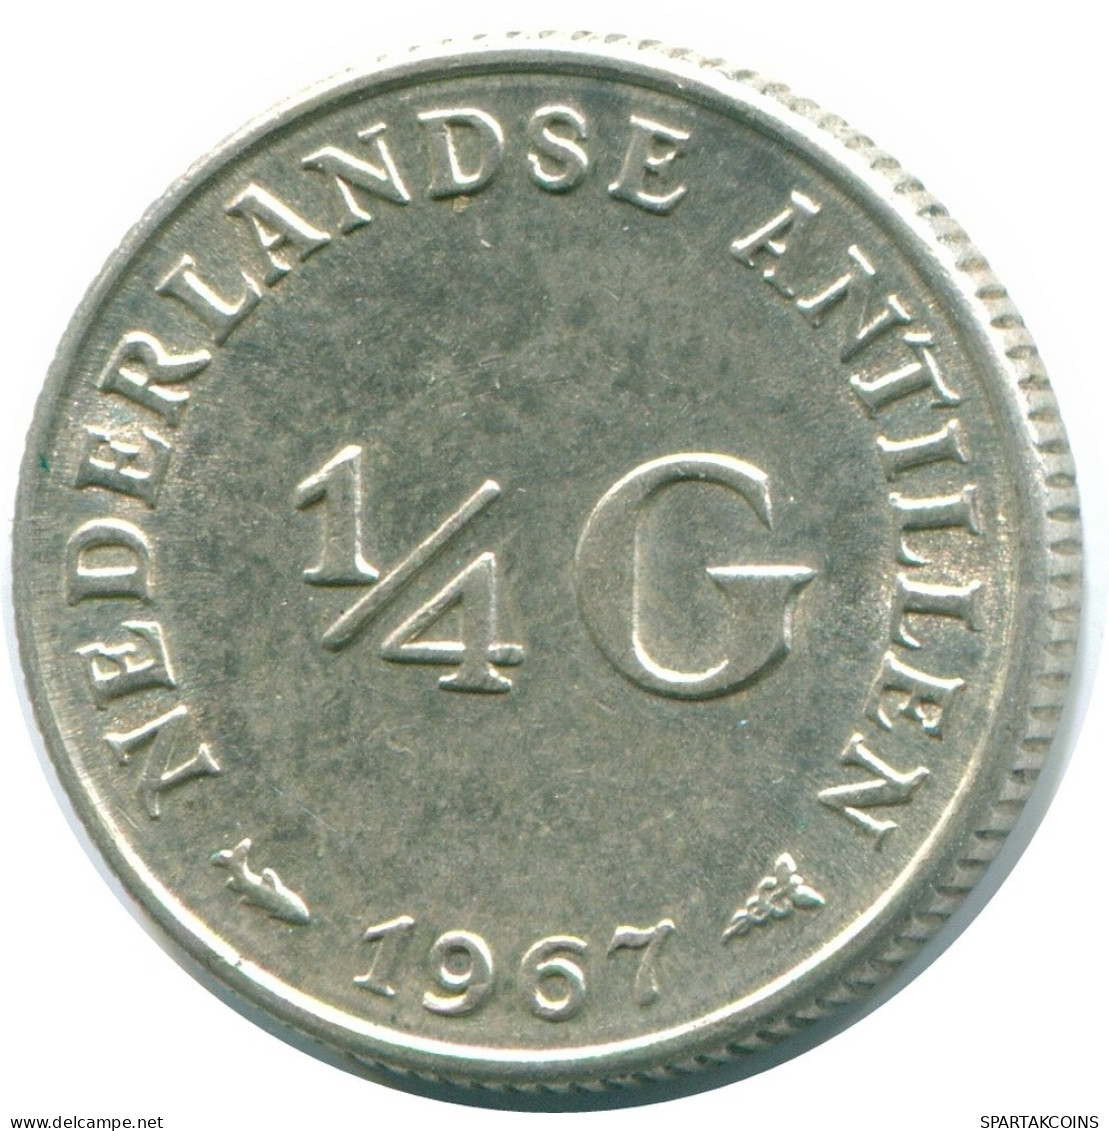 1/4 GULDEN 1967 NIEDERLÄNDISCHE ANTILLEN SILBER Koloniale Münze #NL11440.4.D.A - Netherlands Antilles